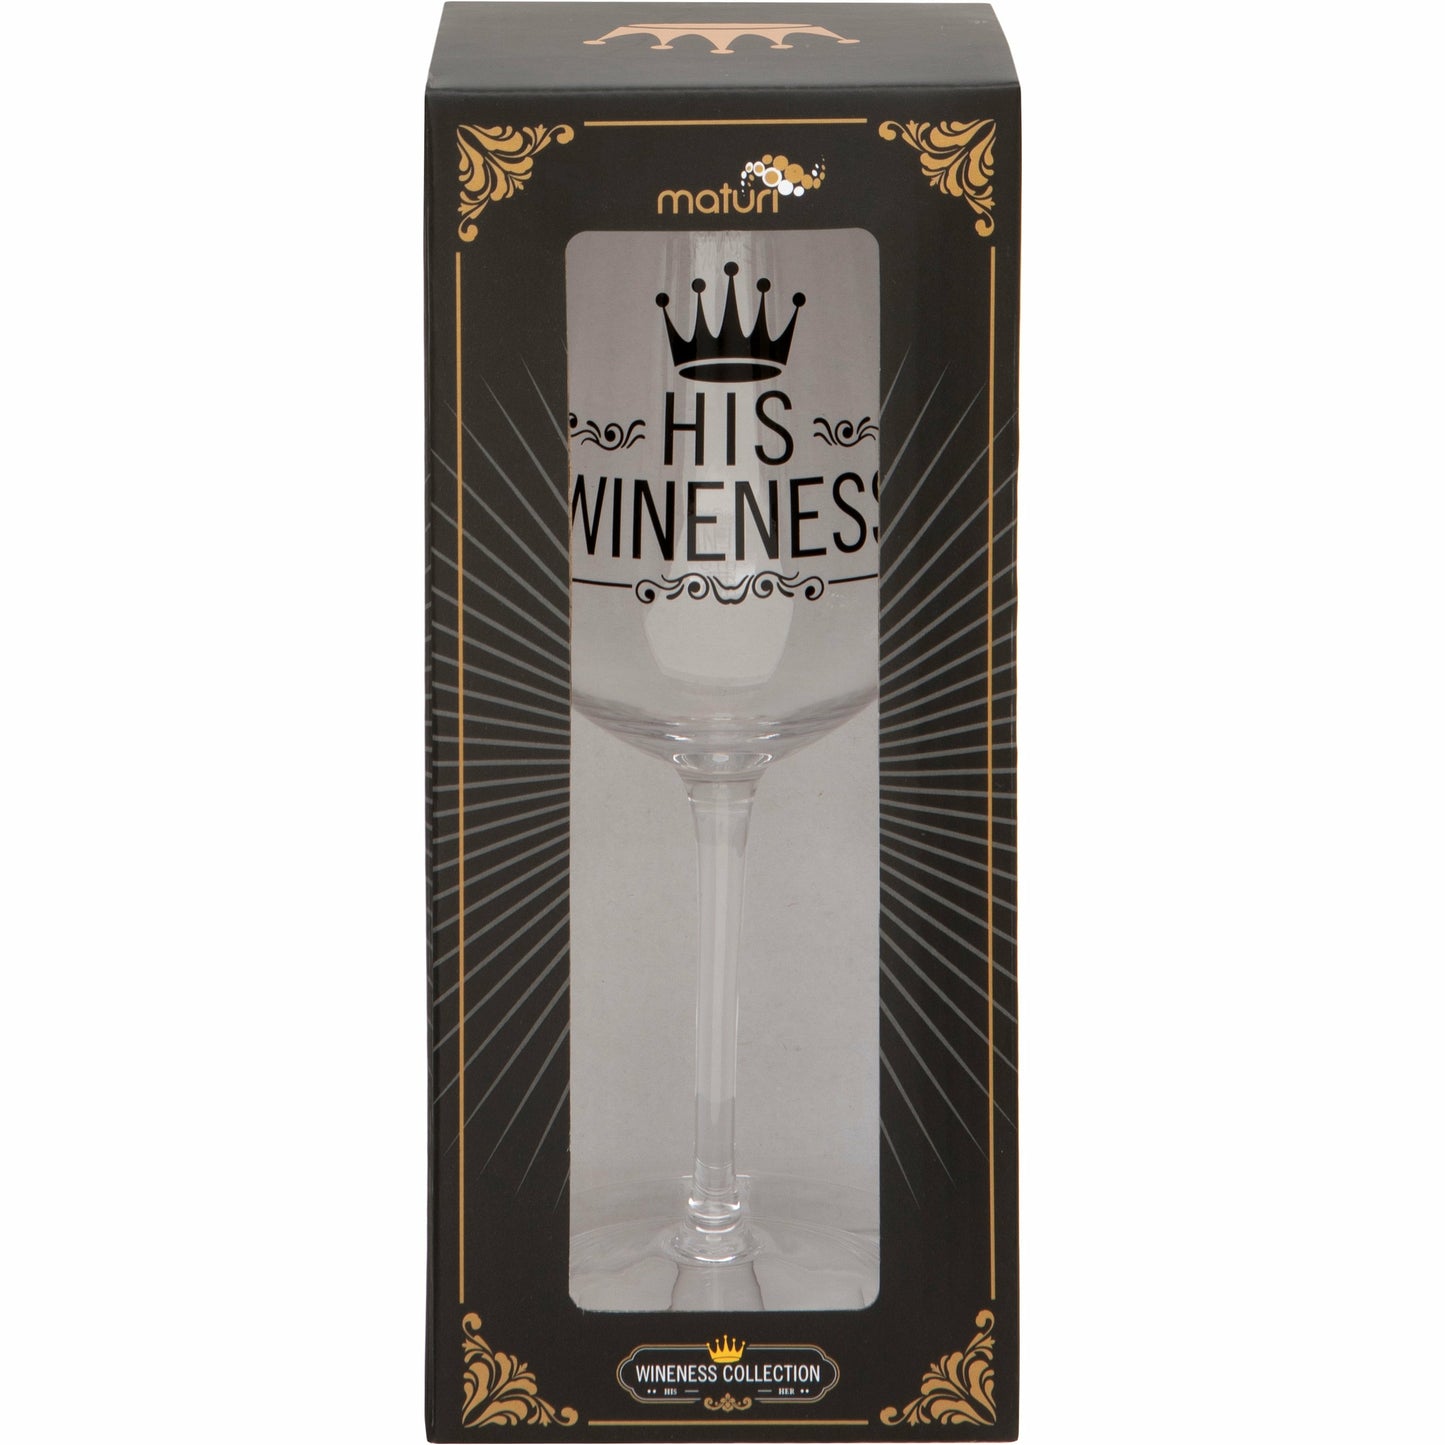 His Wineness Wine Glass